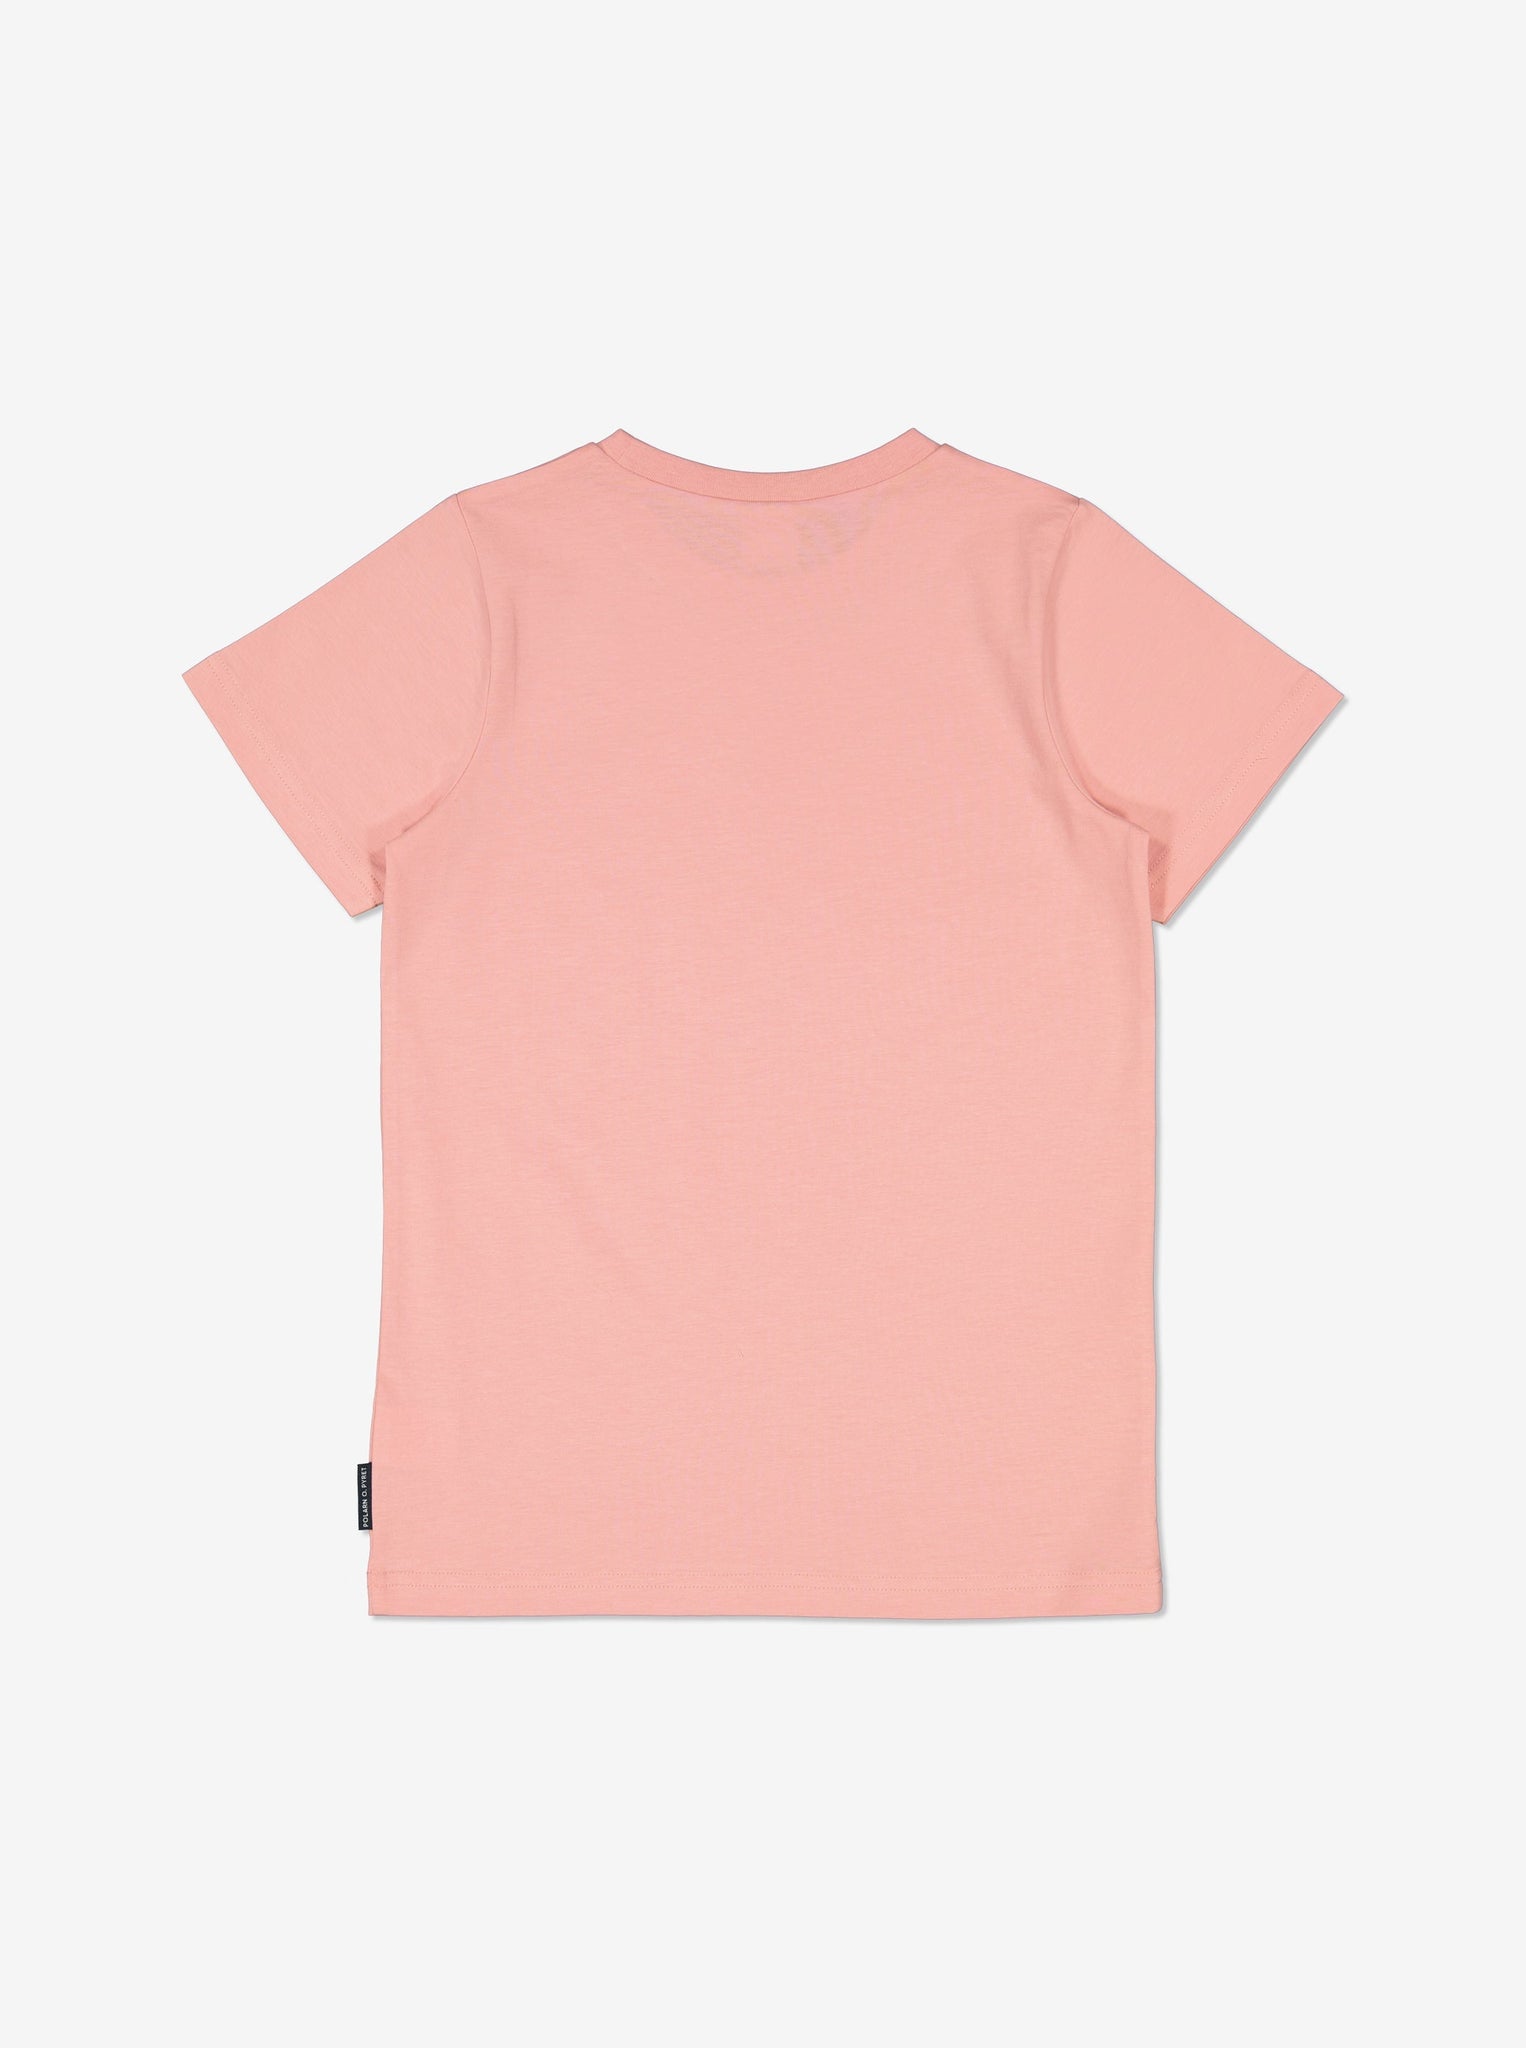  Organic Cotton Pink Kids T-Shirt from Polarn O. Pyret Kidswear. Made using environmentally friendly materials.